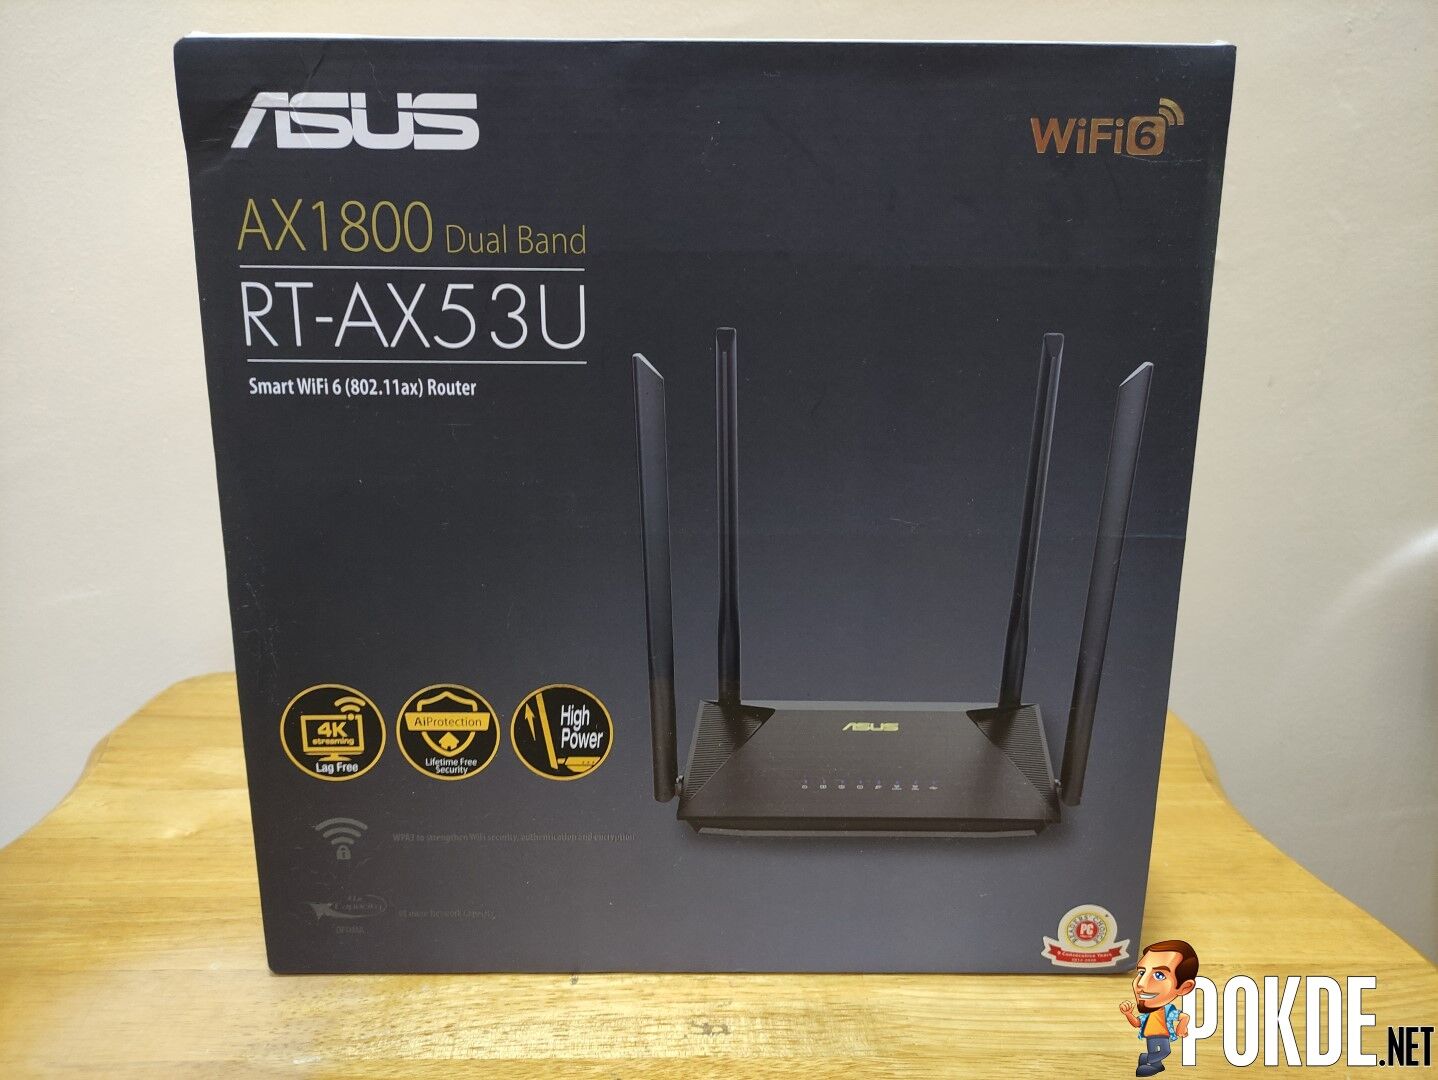 ASUS RT-AX53U AX1800 Dual Band Router Review 20